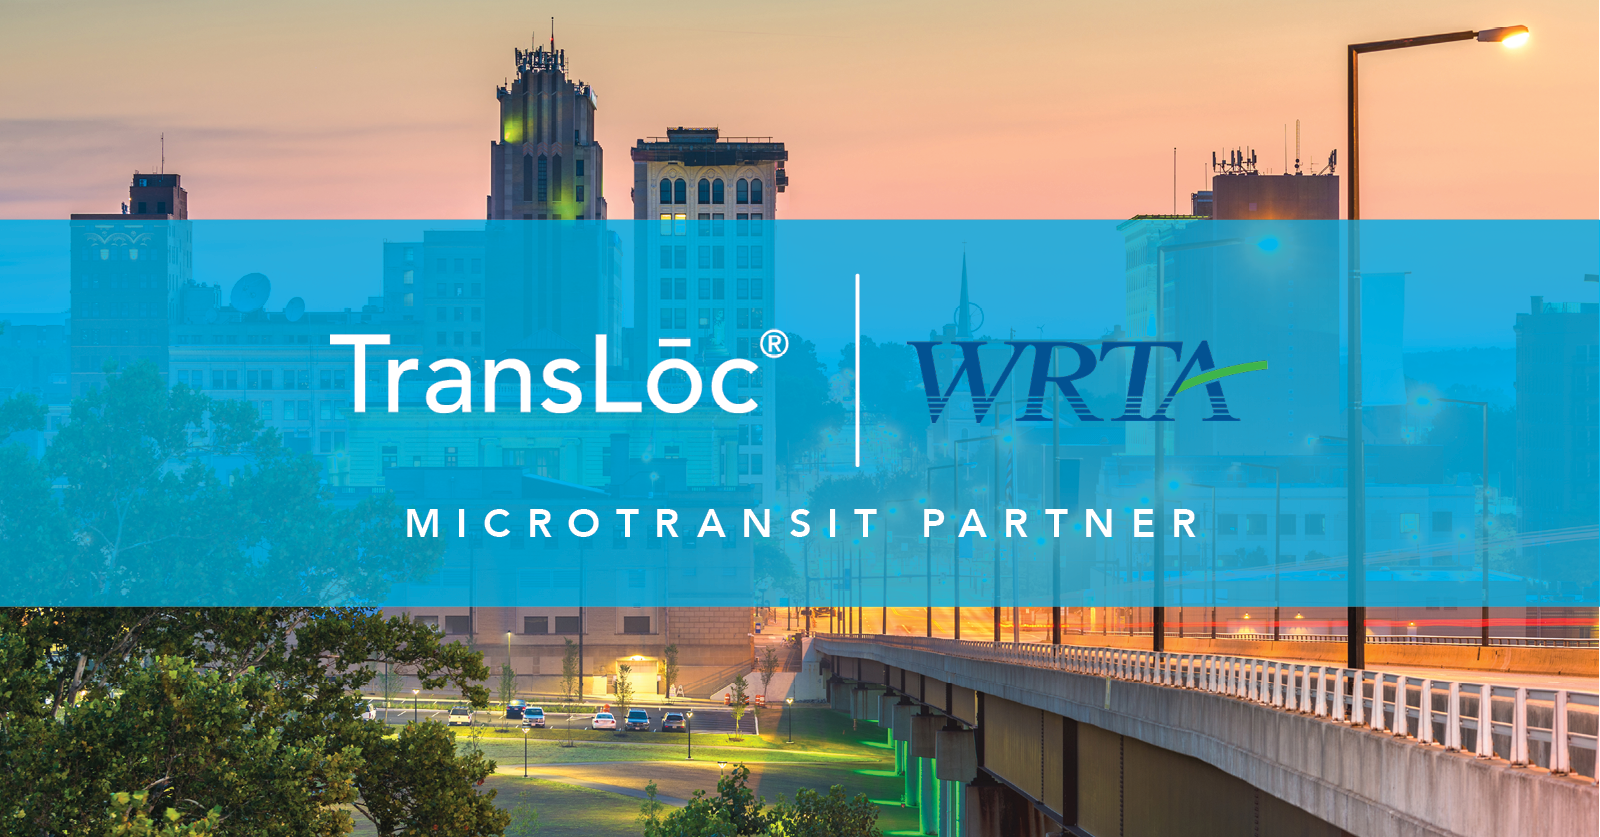 TransLoc, WRTA Microtransit Partner